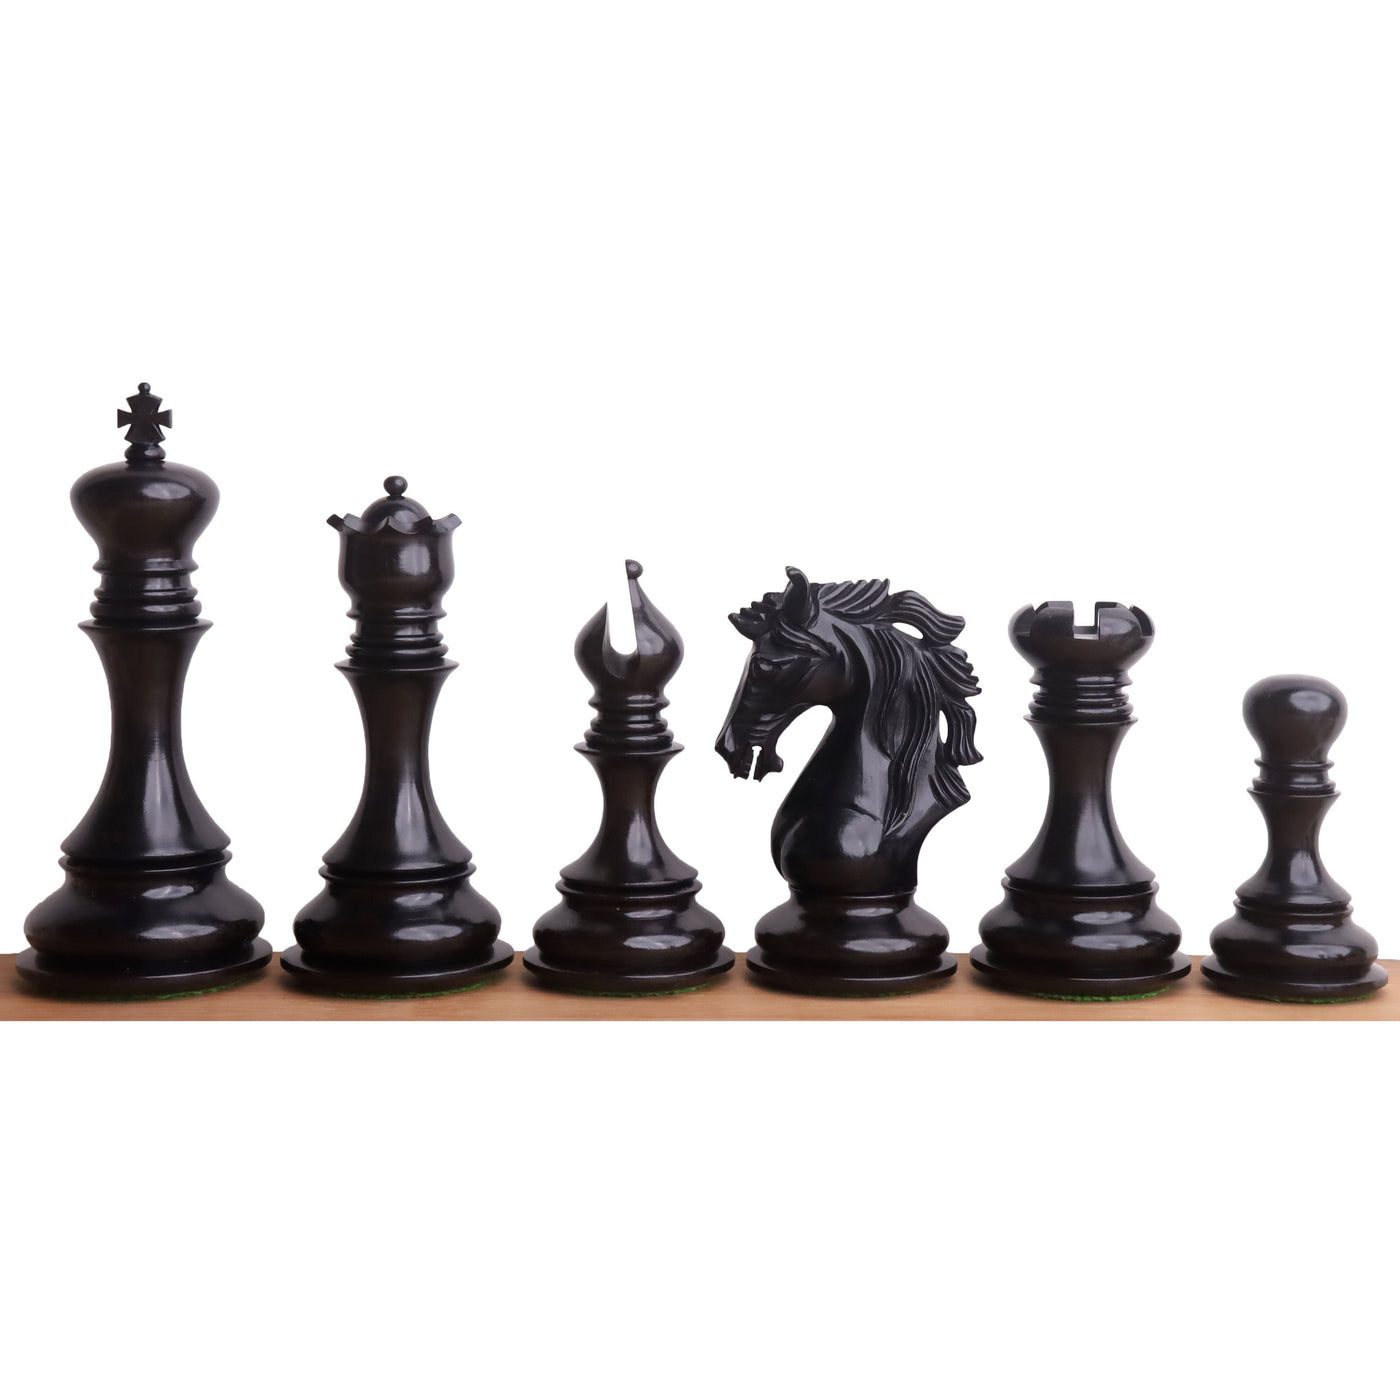 4.4" Goliath Series Luxury Staunton Chess Set - Chess Pieces Only - Ebony Wood & Boxwood